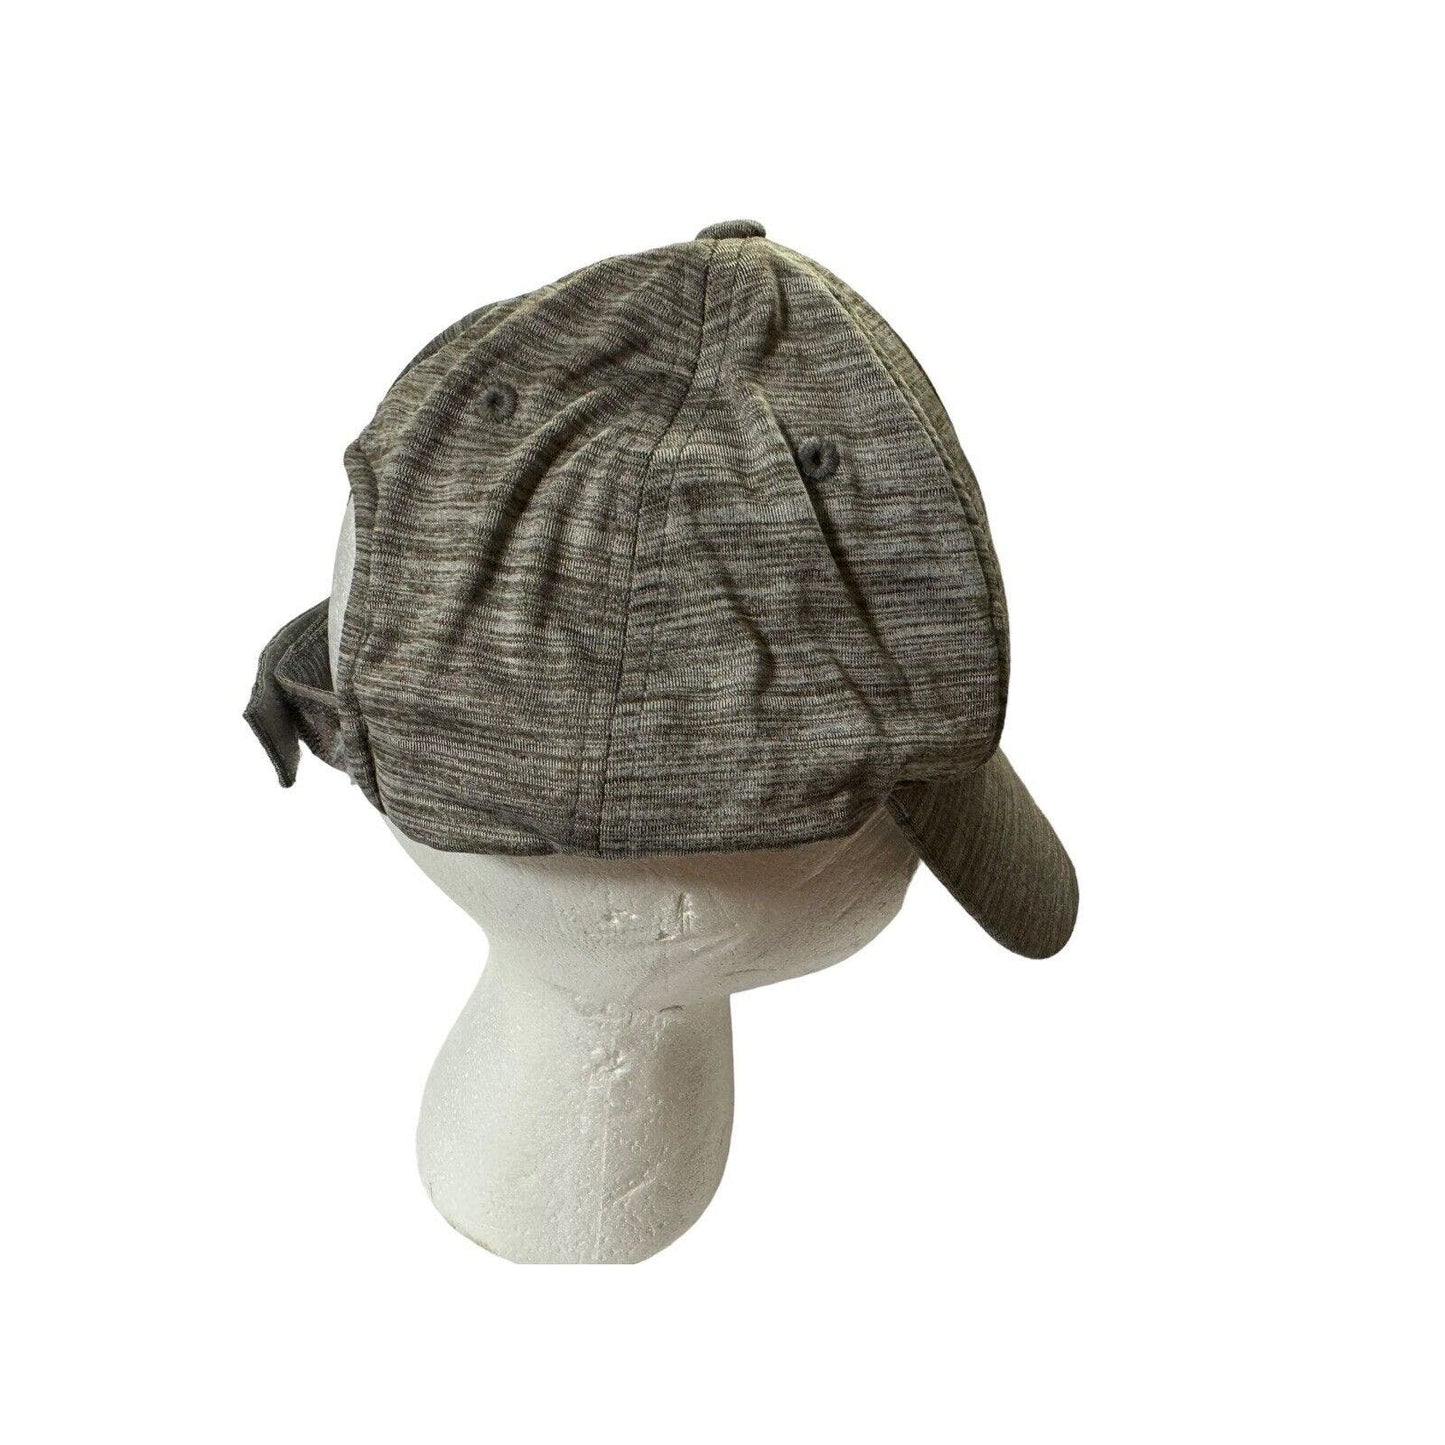 Captivating LSU Grey Striped Embroidered Adjustable Hat Cap